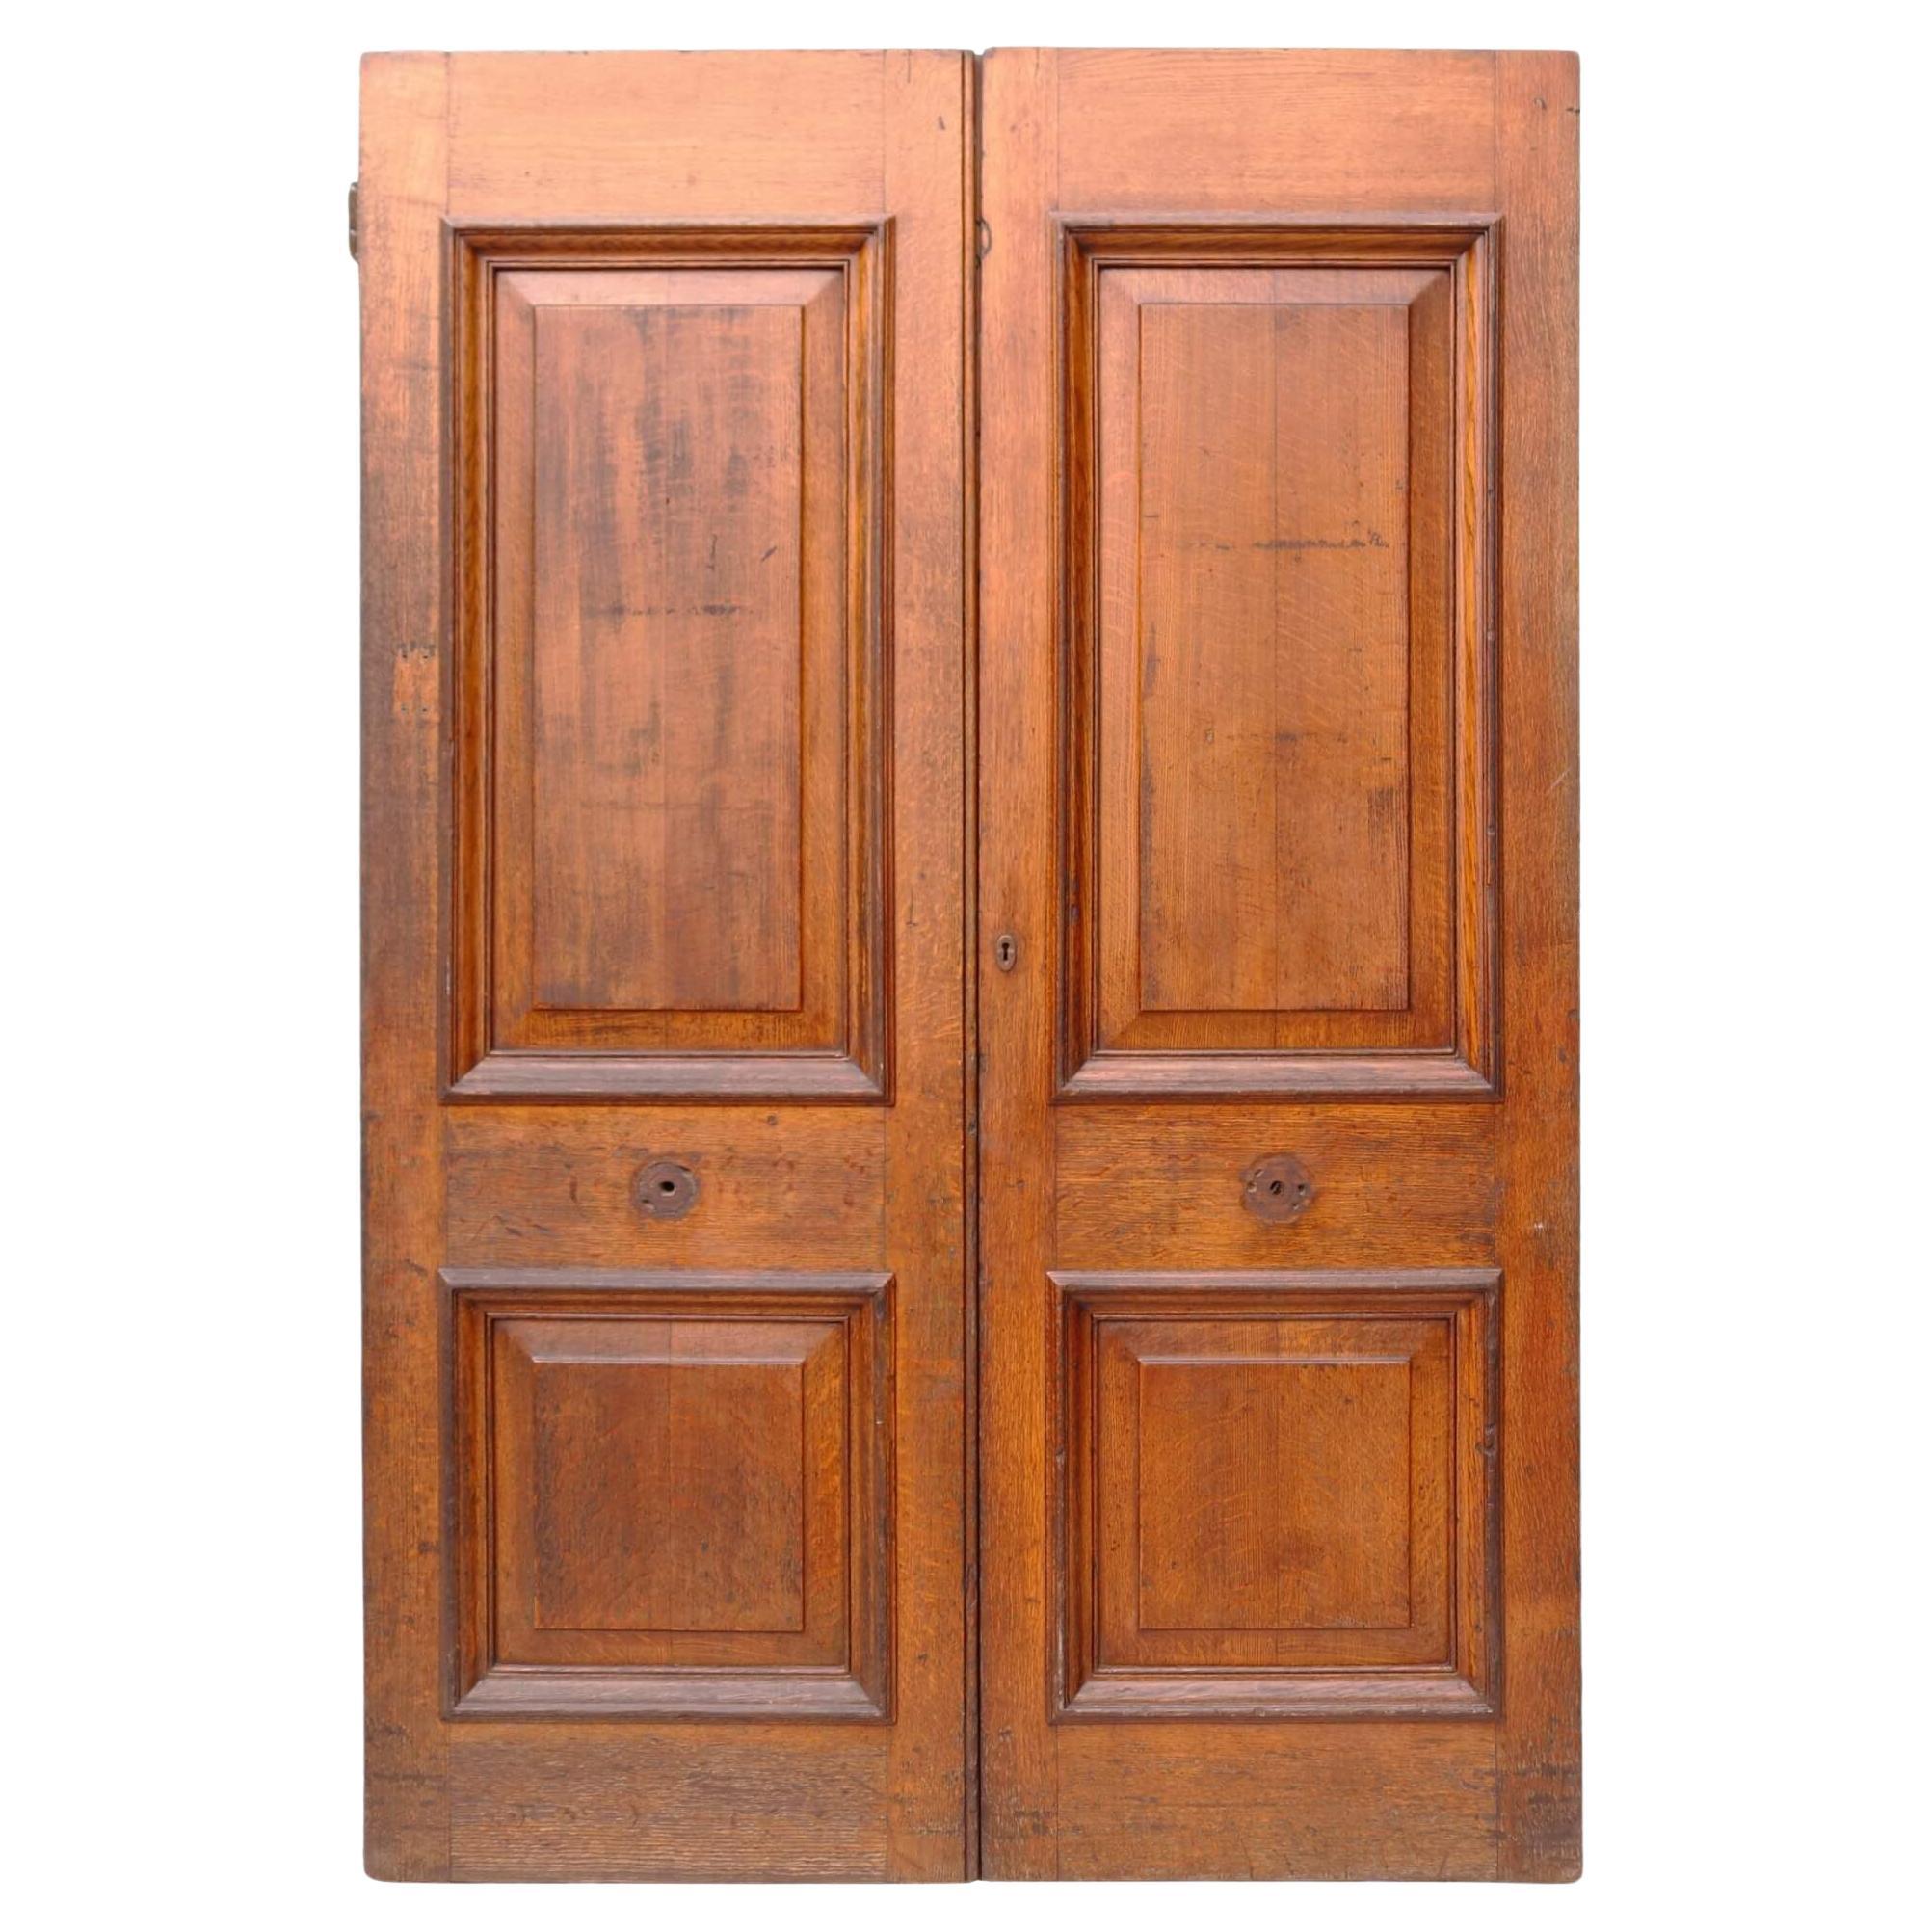 Large Oak Edwardian Double Front Doors